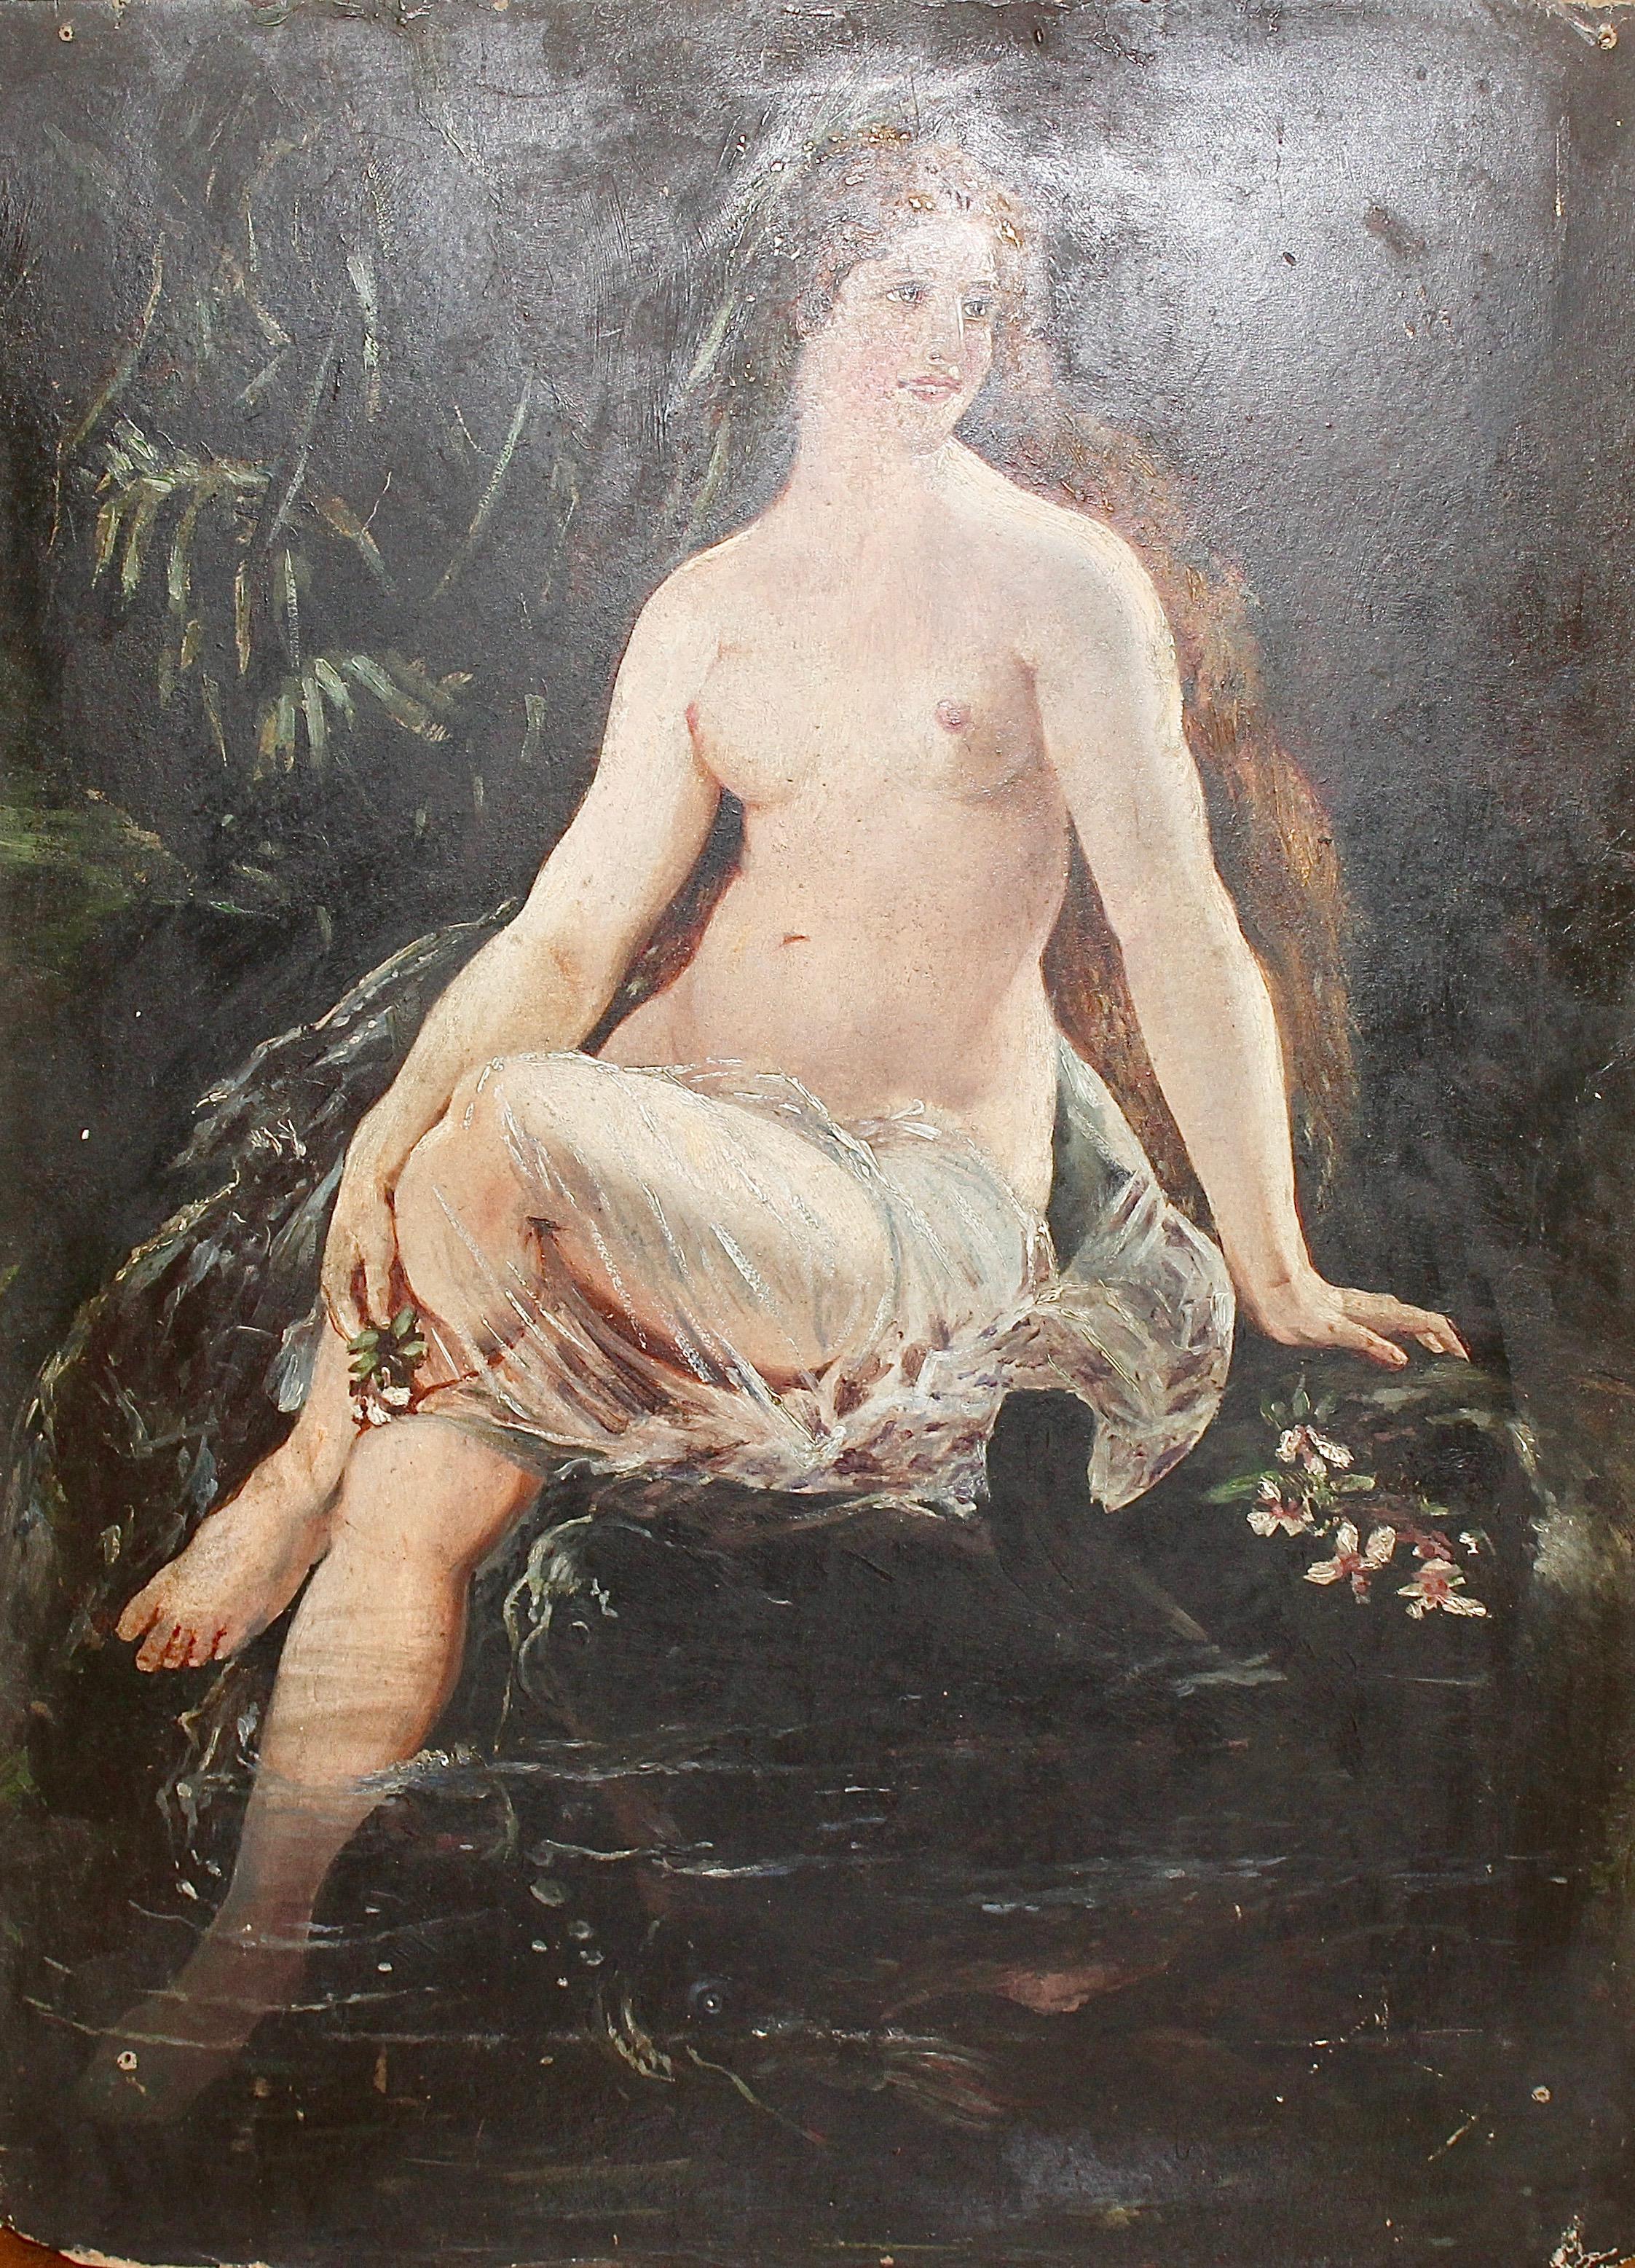 CHENPAT1145 naked mermaid girl&Peace dove handmade oil painting art on canvas 